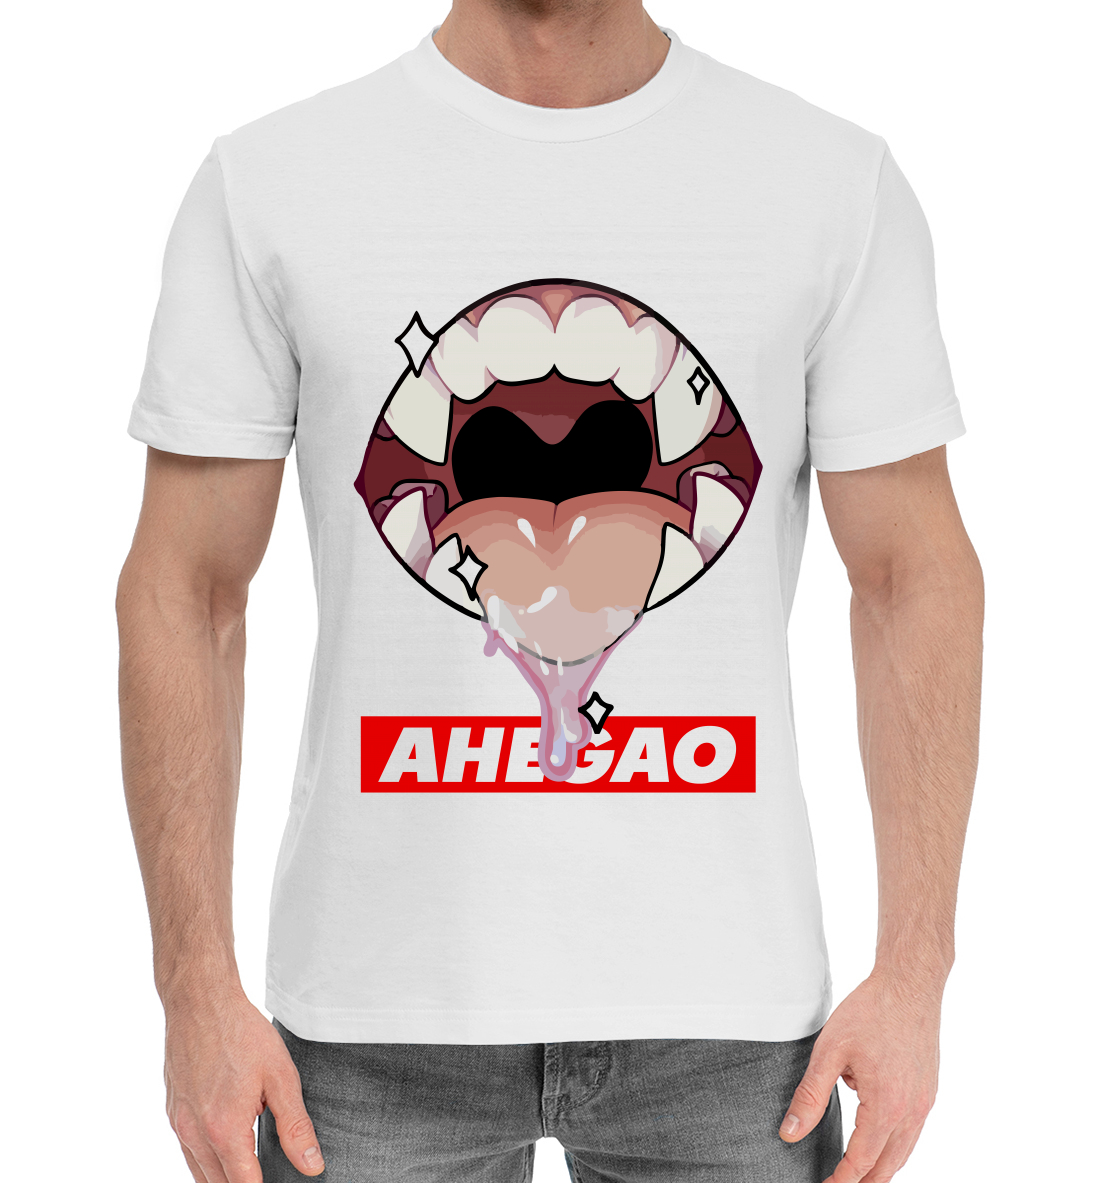 Мужская Хлопковая футболка с принтом Ahegao, артикул AHG-518714-hfu-2mp